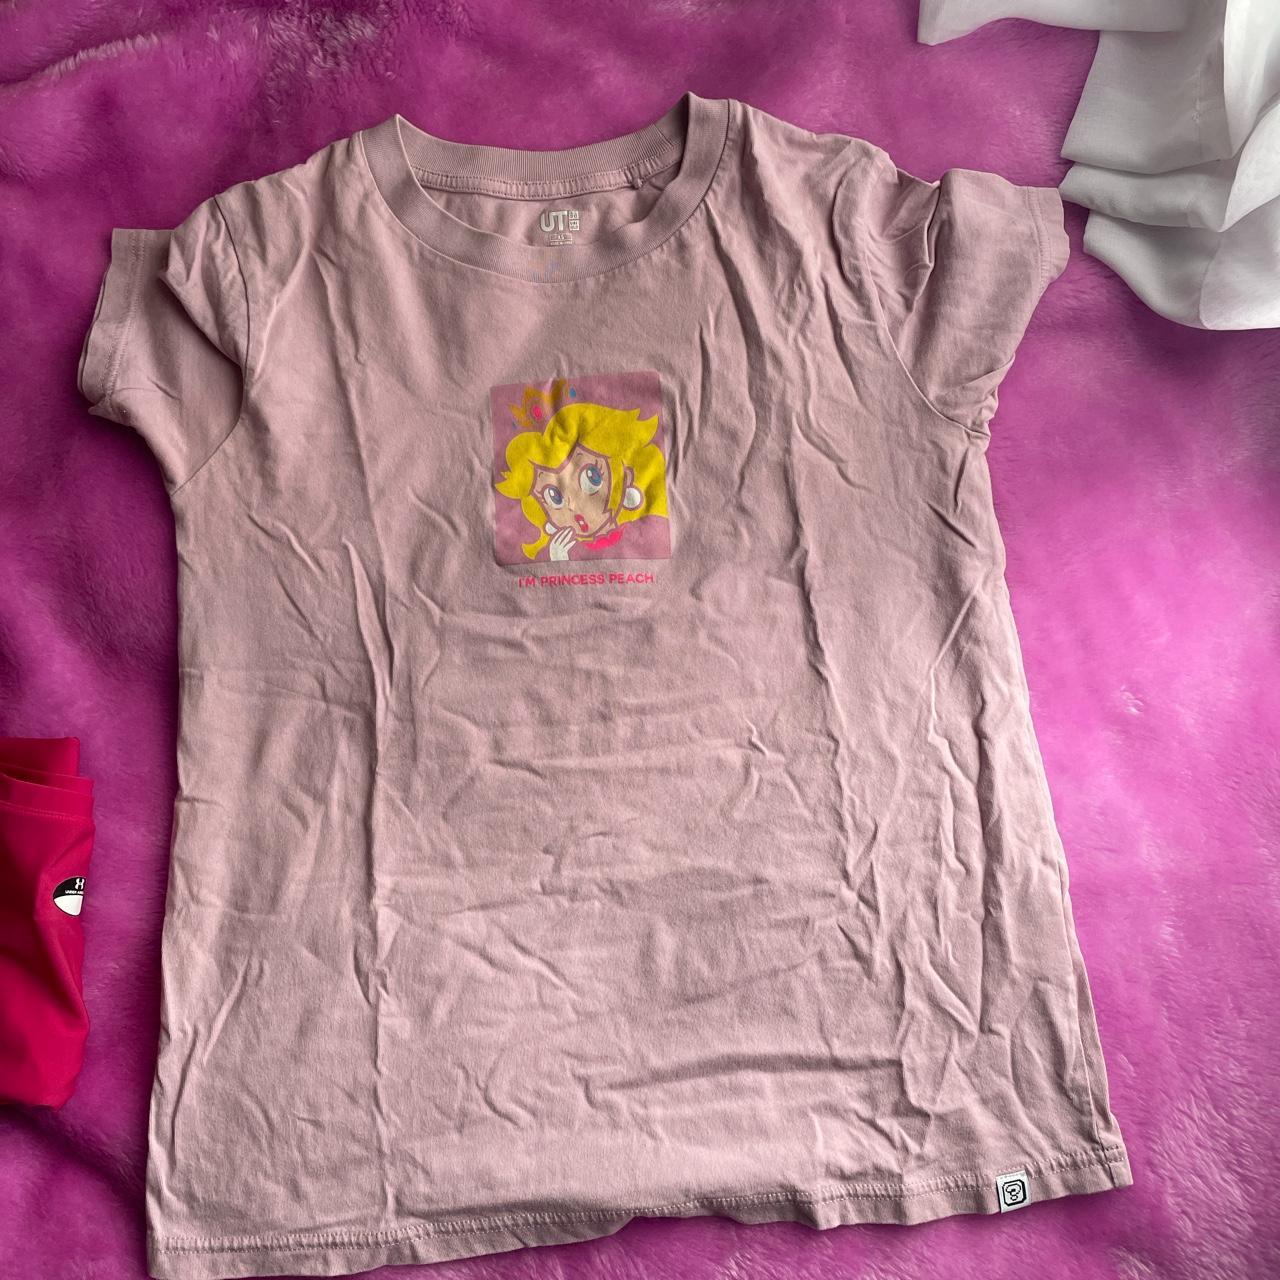 Princess peach Uniqlo Tshirt Super soft and cute - Depop